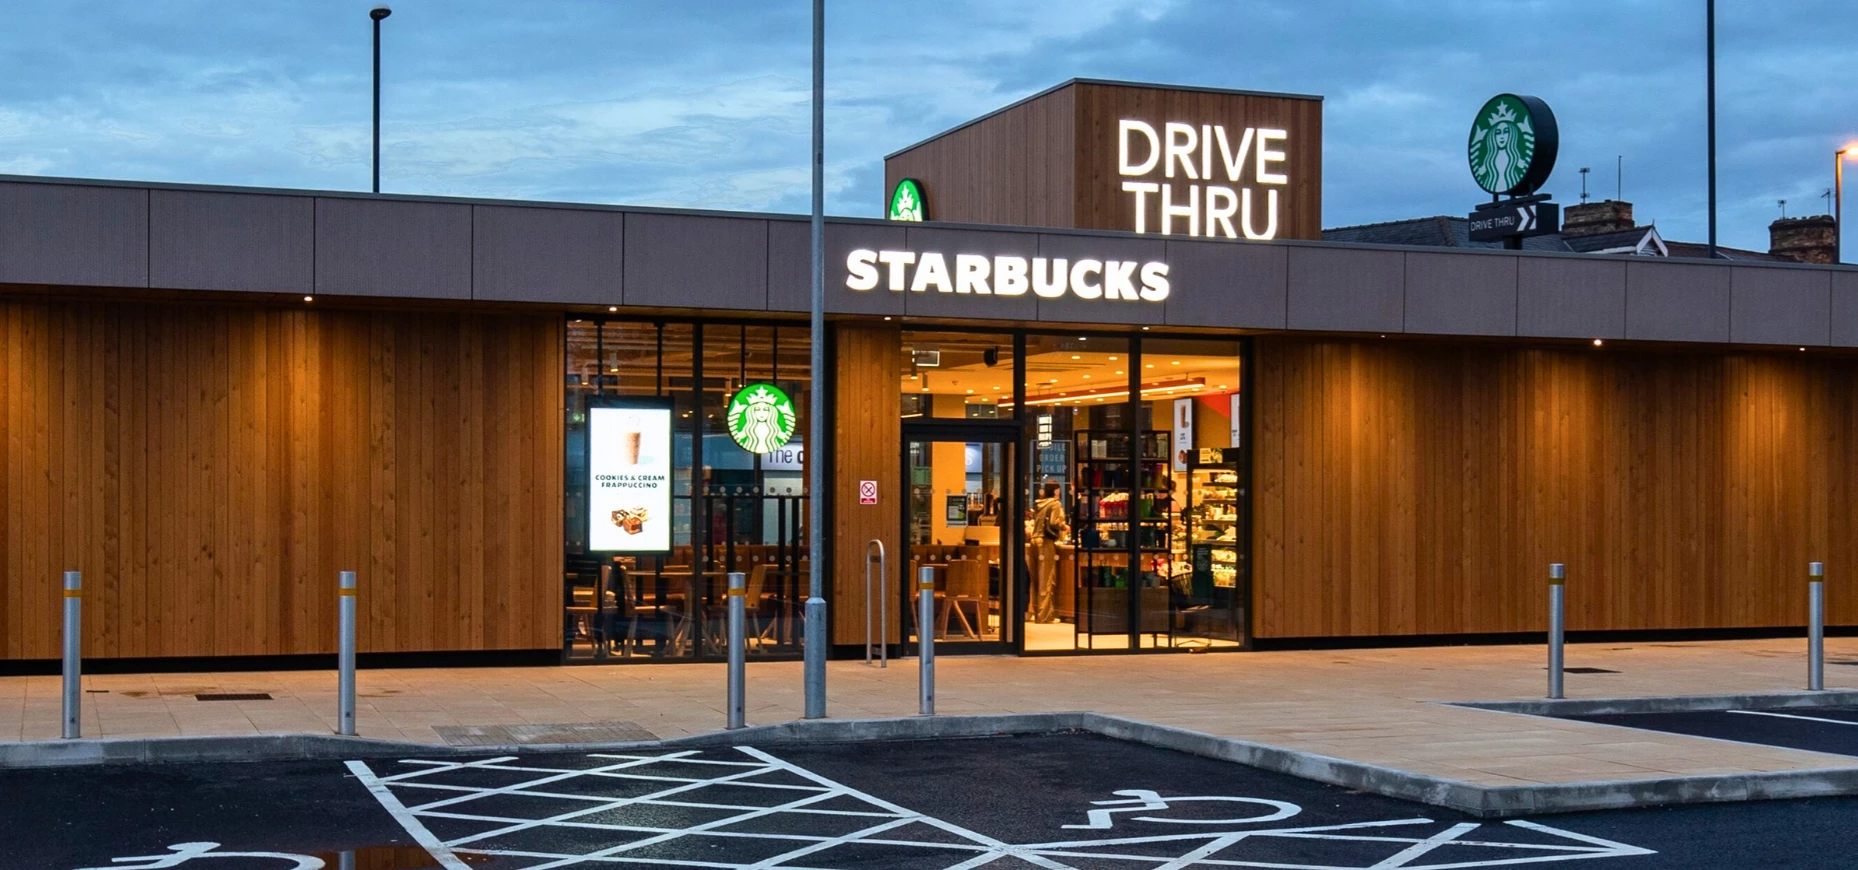 New Starbucks drive-thru café at Europarc